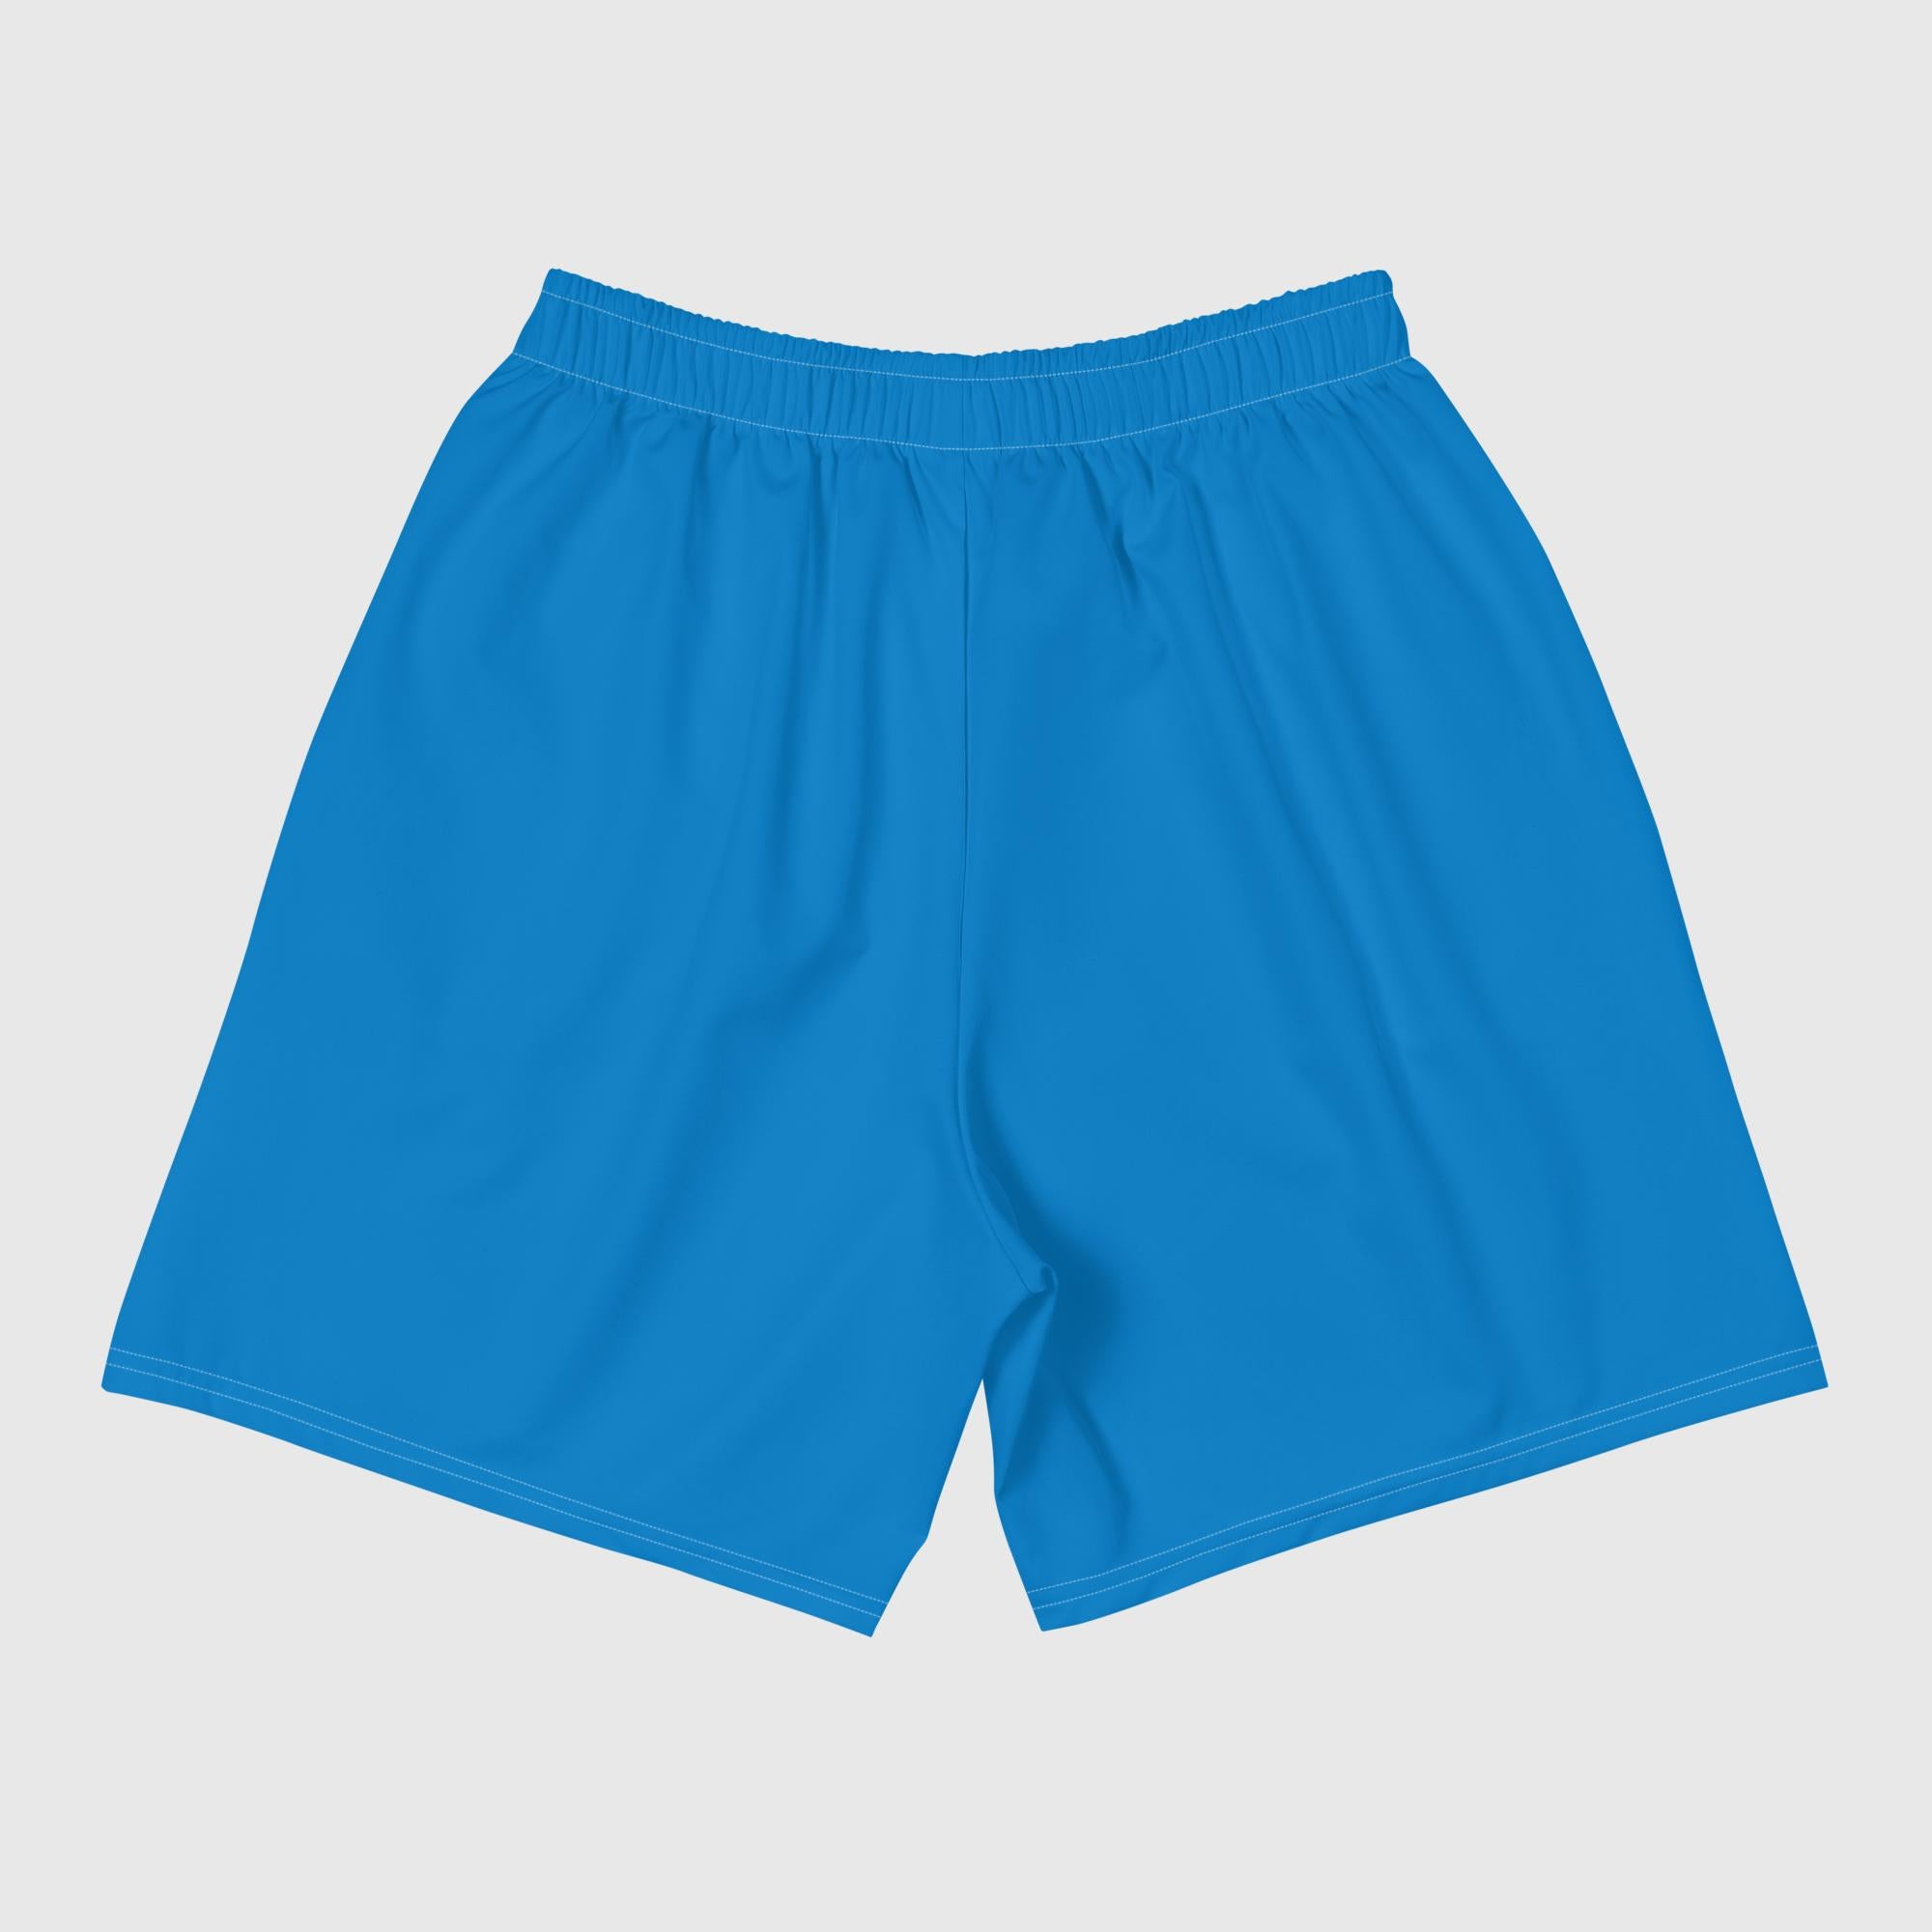 Shorts deportivos reciclados para hombre - Azul